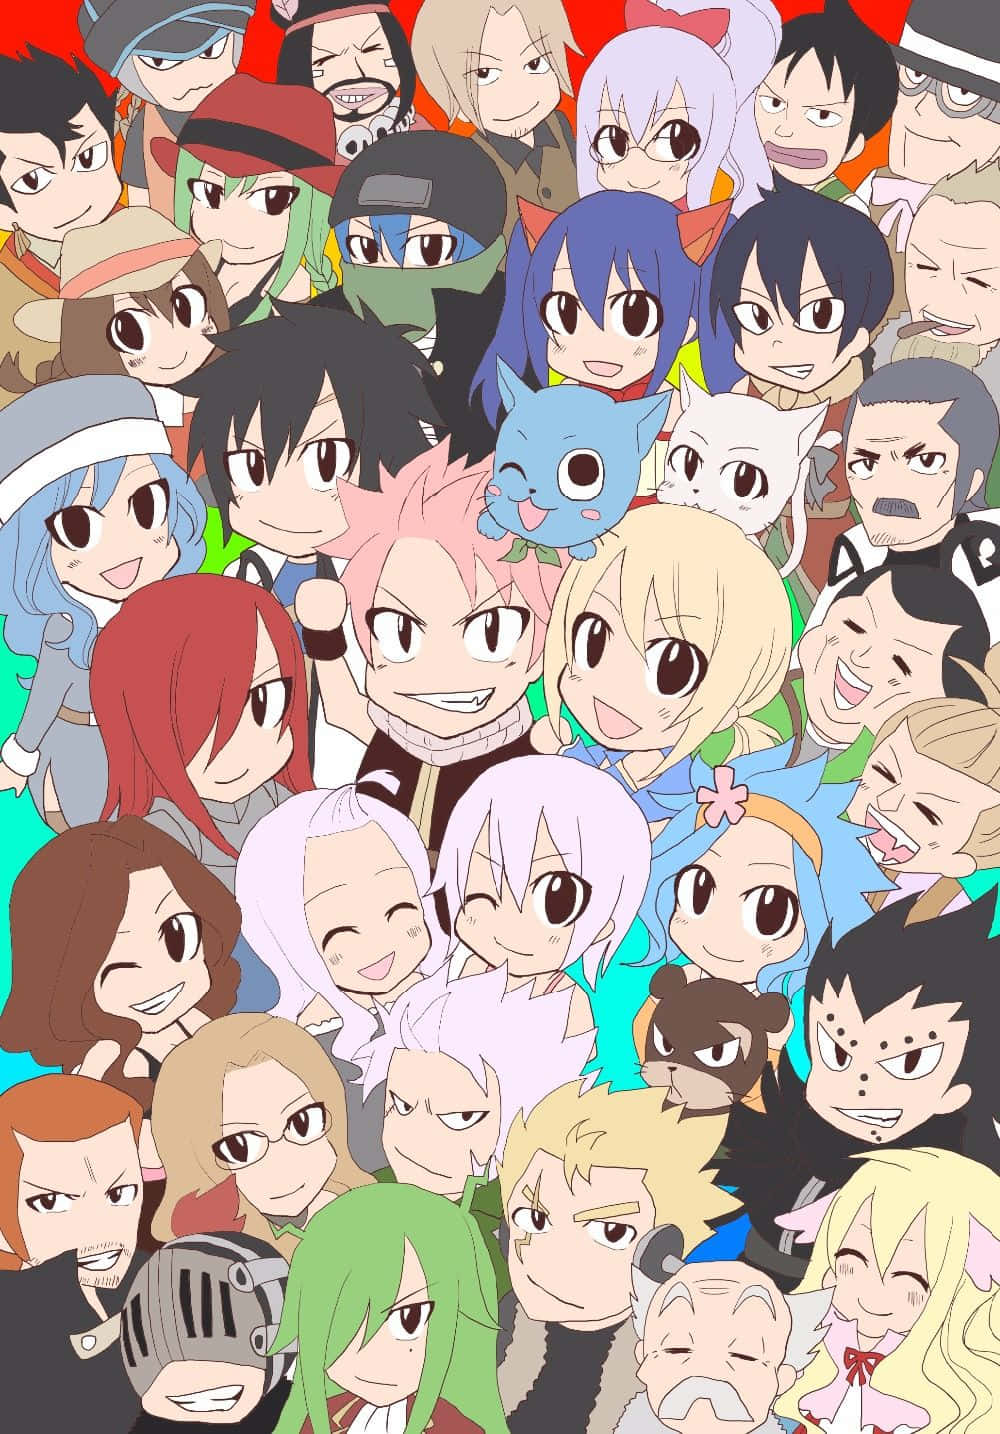 Engrupp Animekaraktärer Samlades Tillsammans